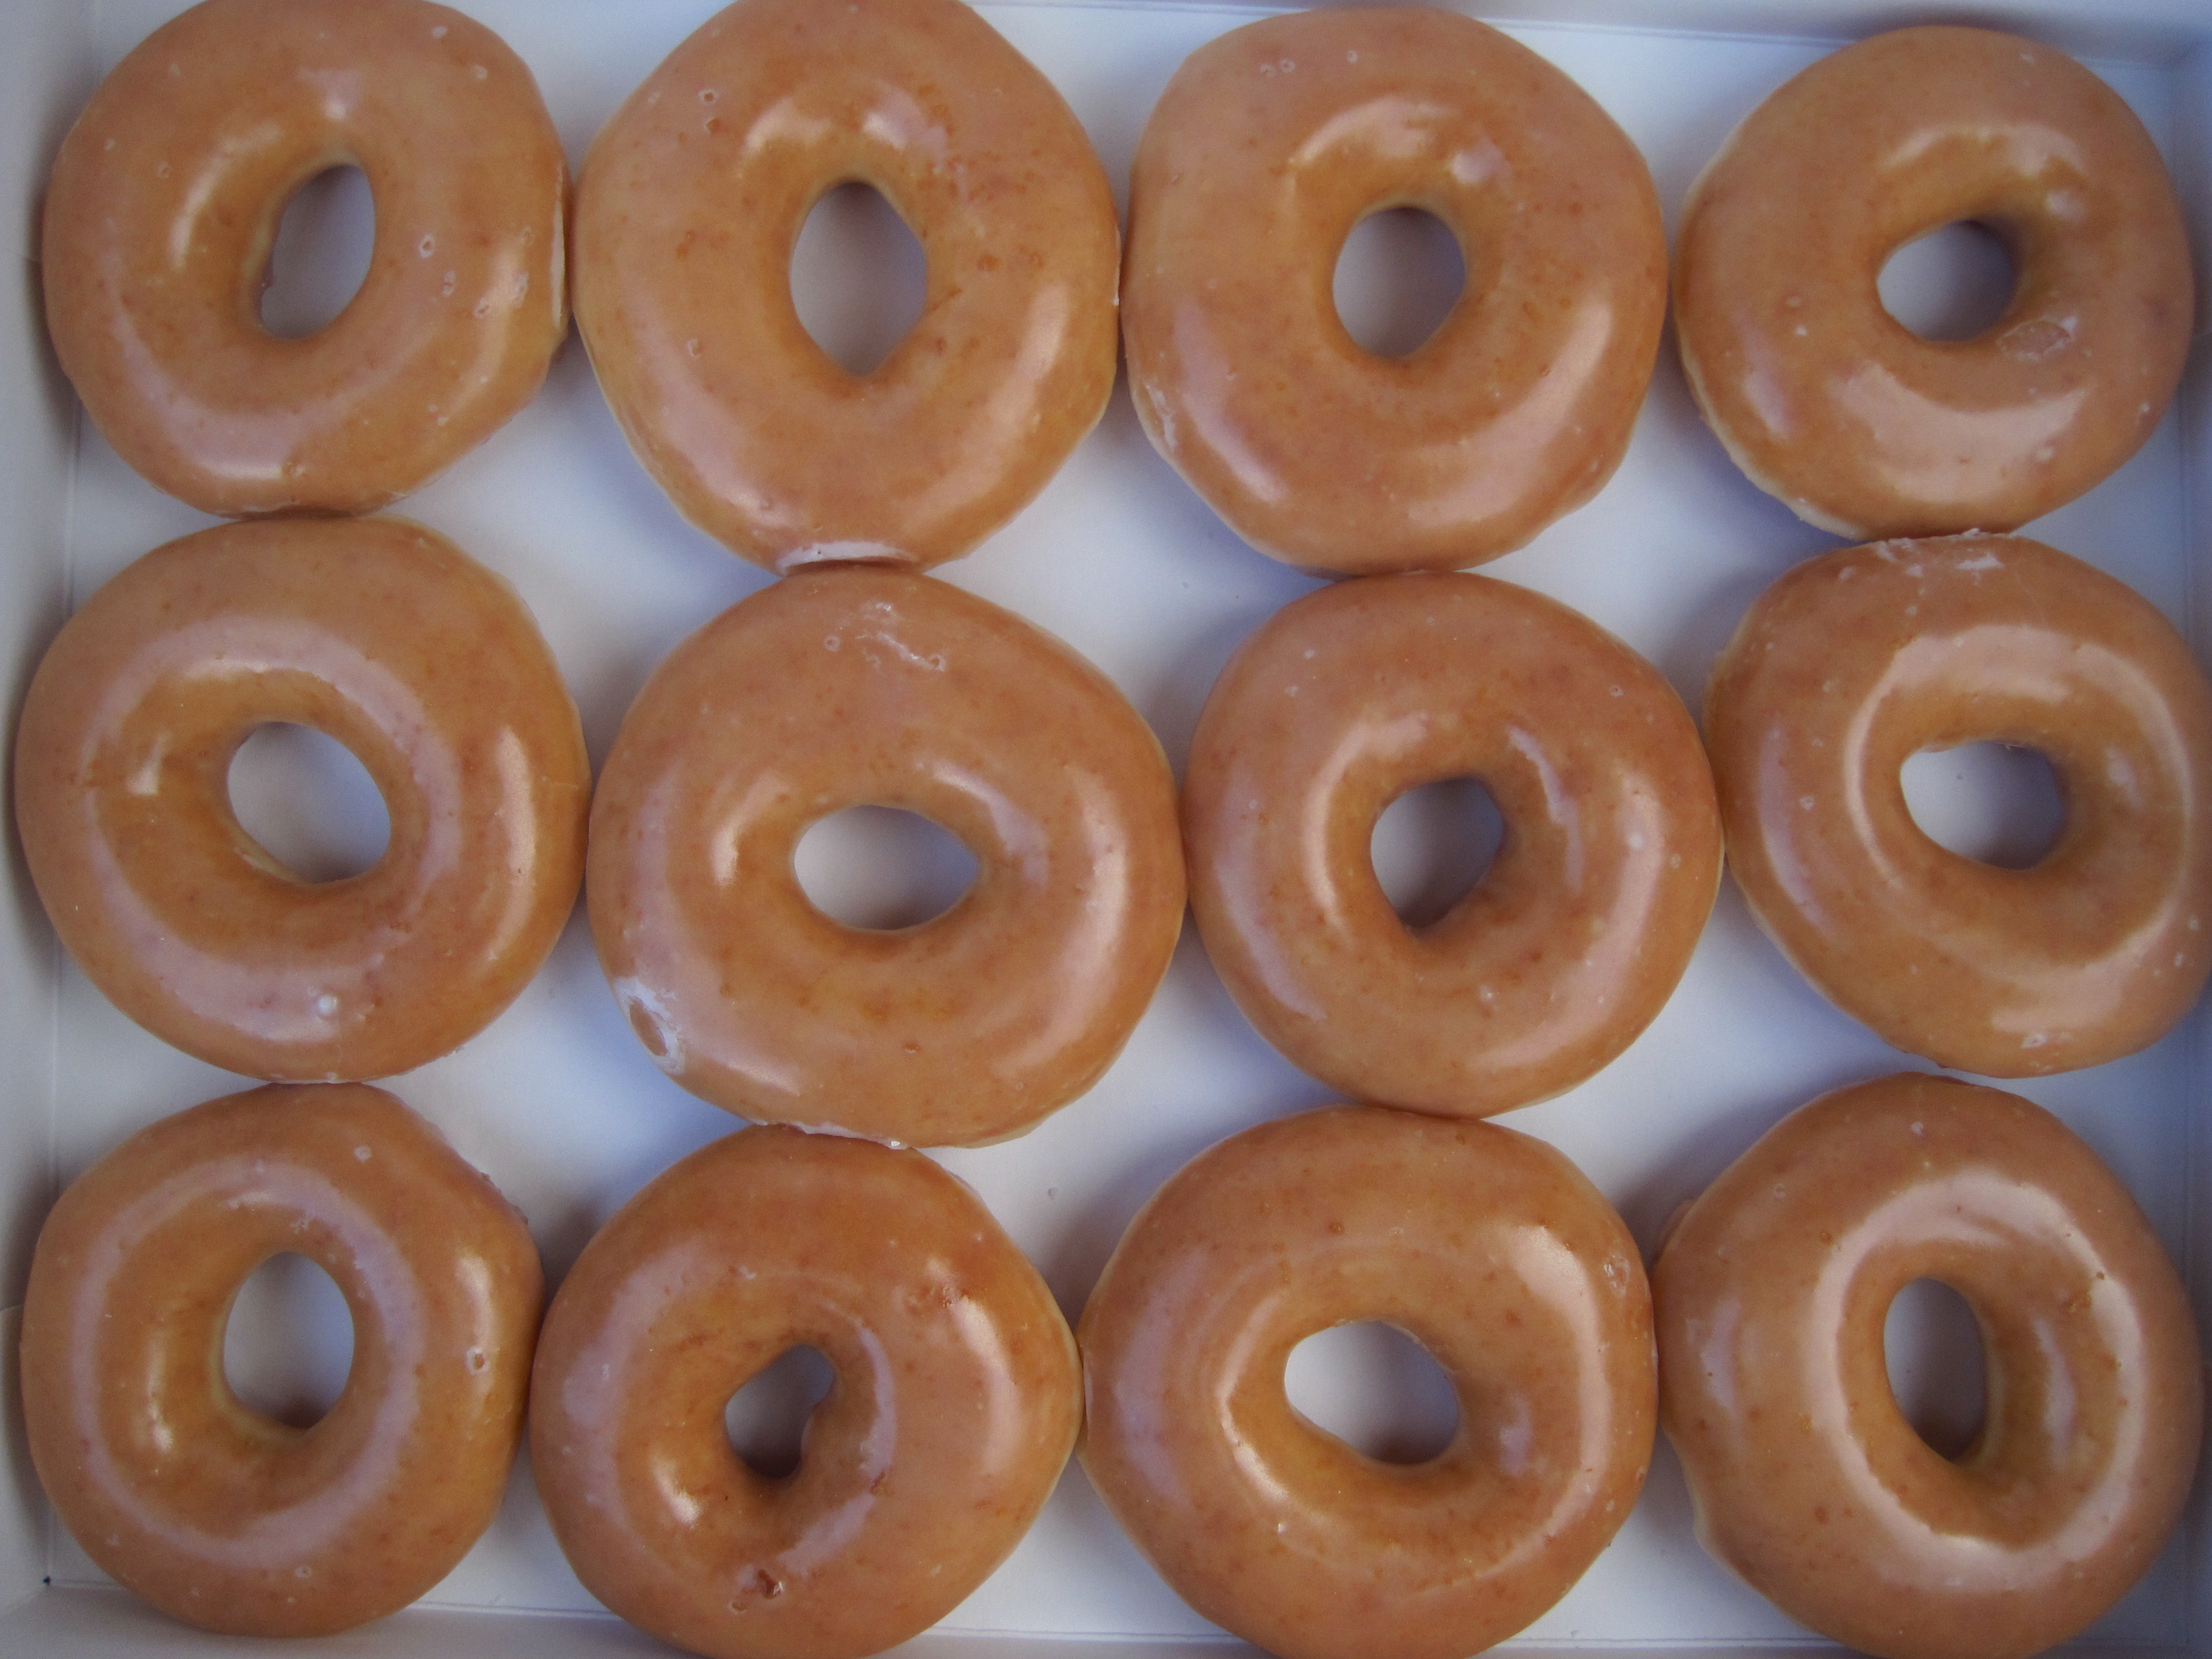 Krispy Kreme glazed donuts.